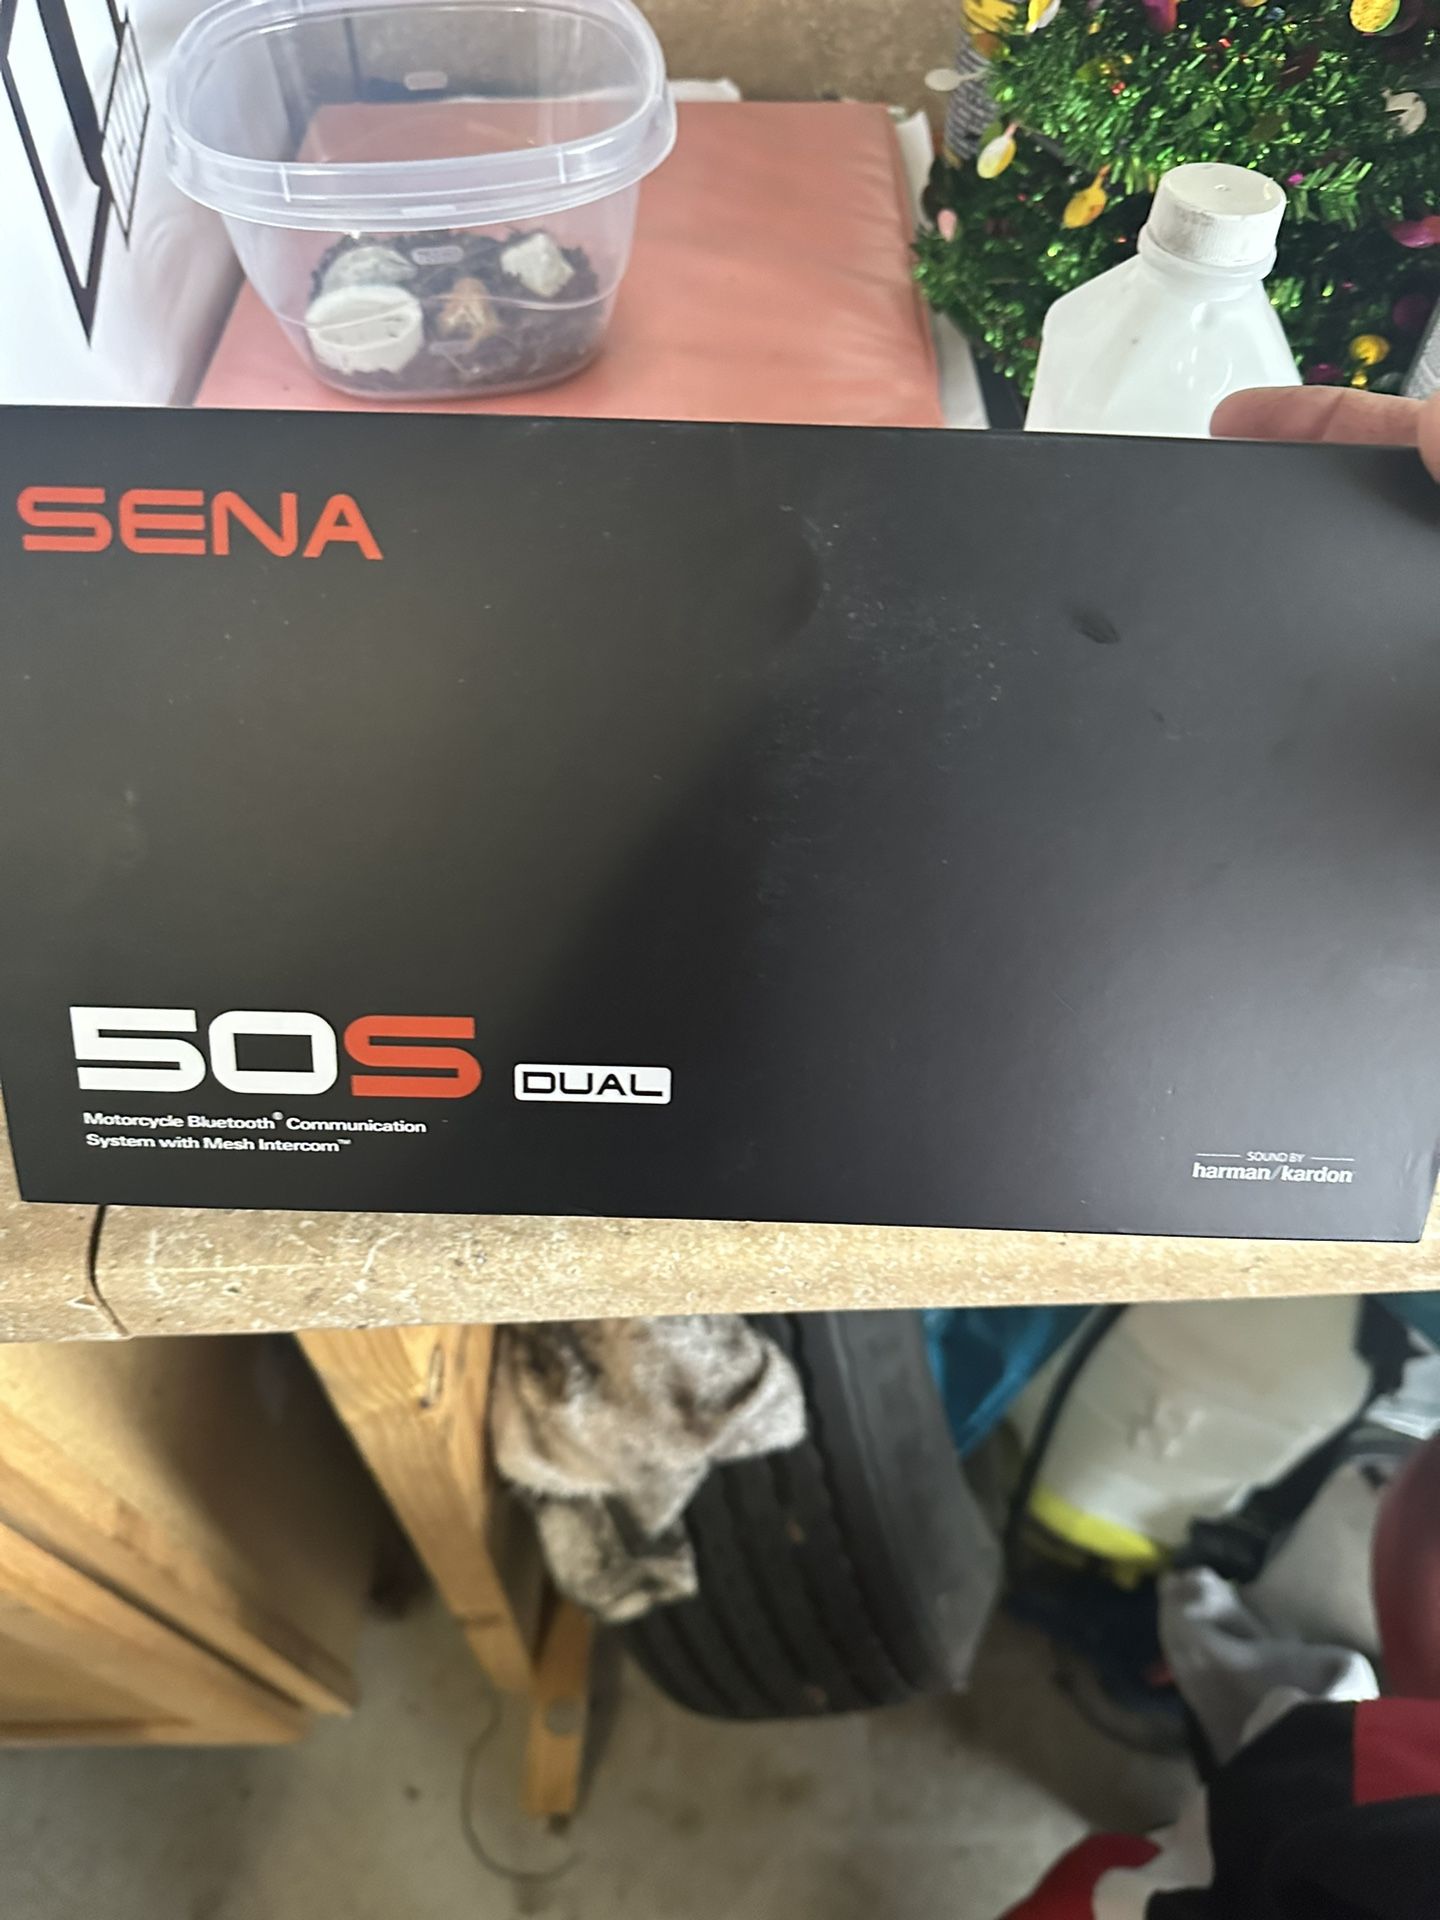 Sena 50s Dual Motorcycle Helmet Communication Devices 